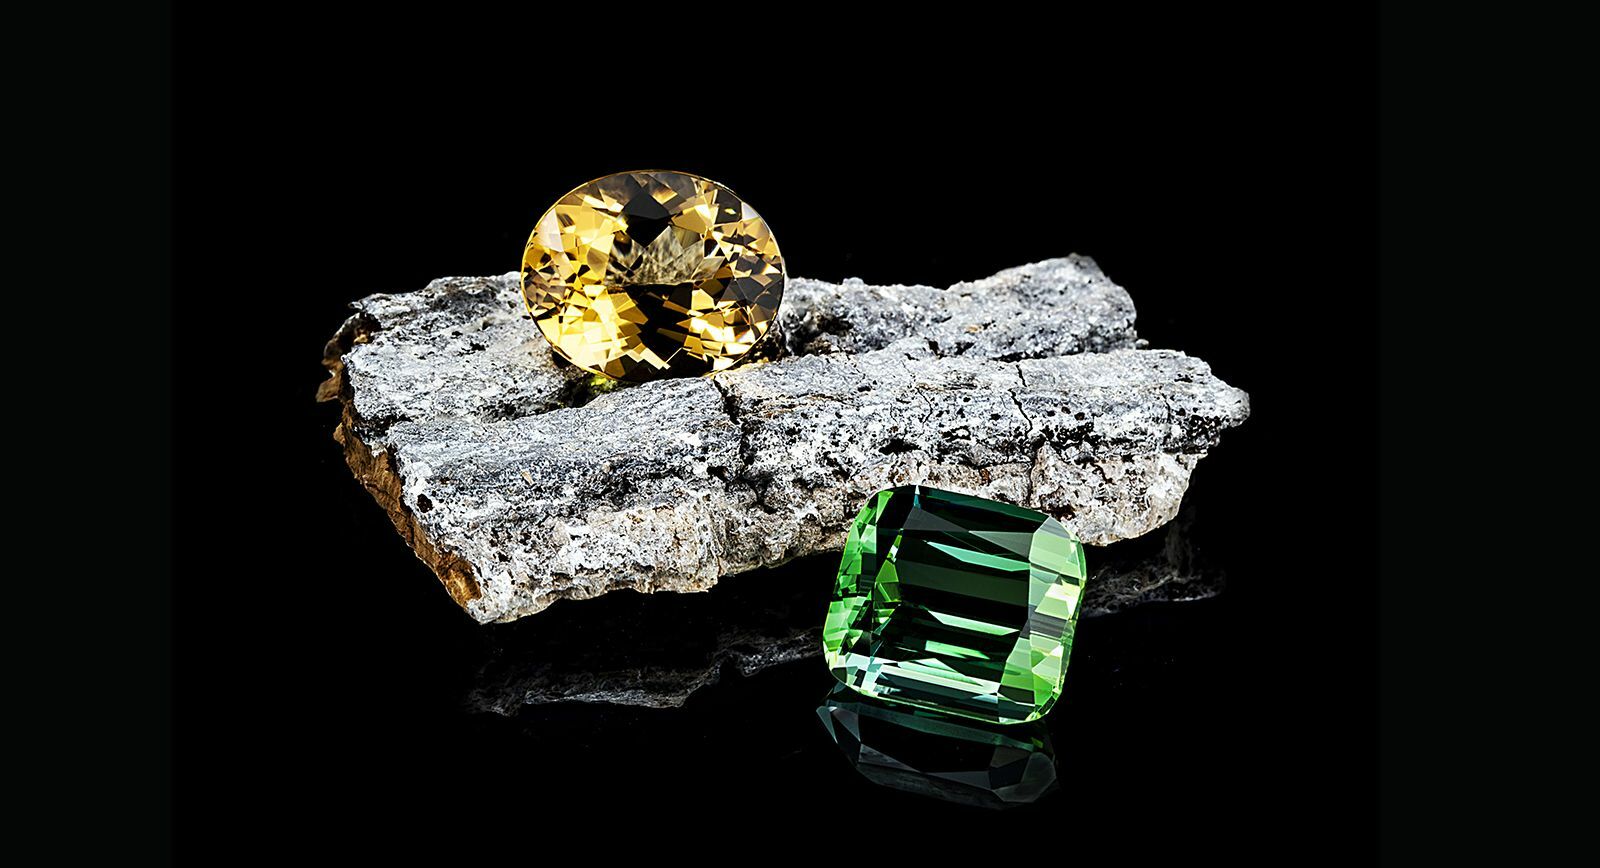 Gemstone Cutting Company Gebrüder Meelis presenting an 11.83 carat yellow beryl and a 17.08 carat tourmaline